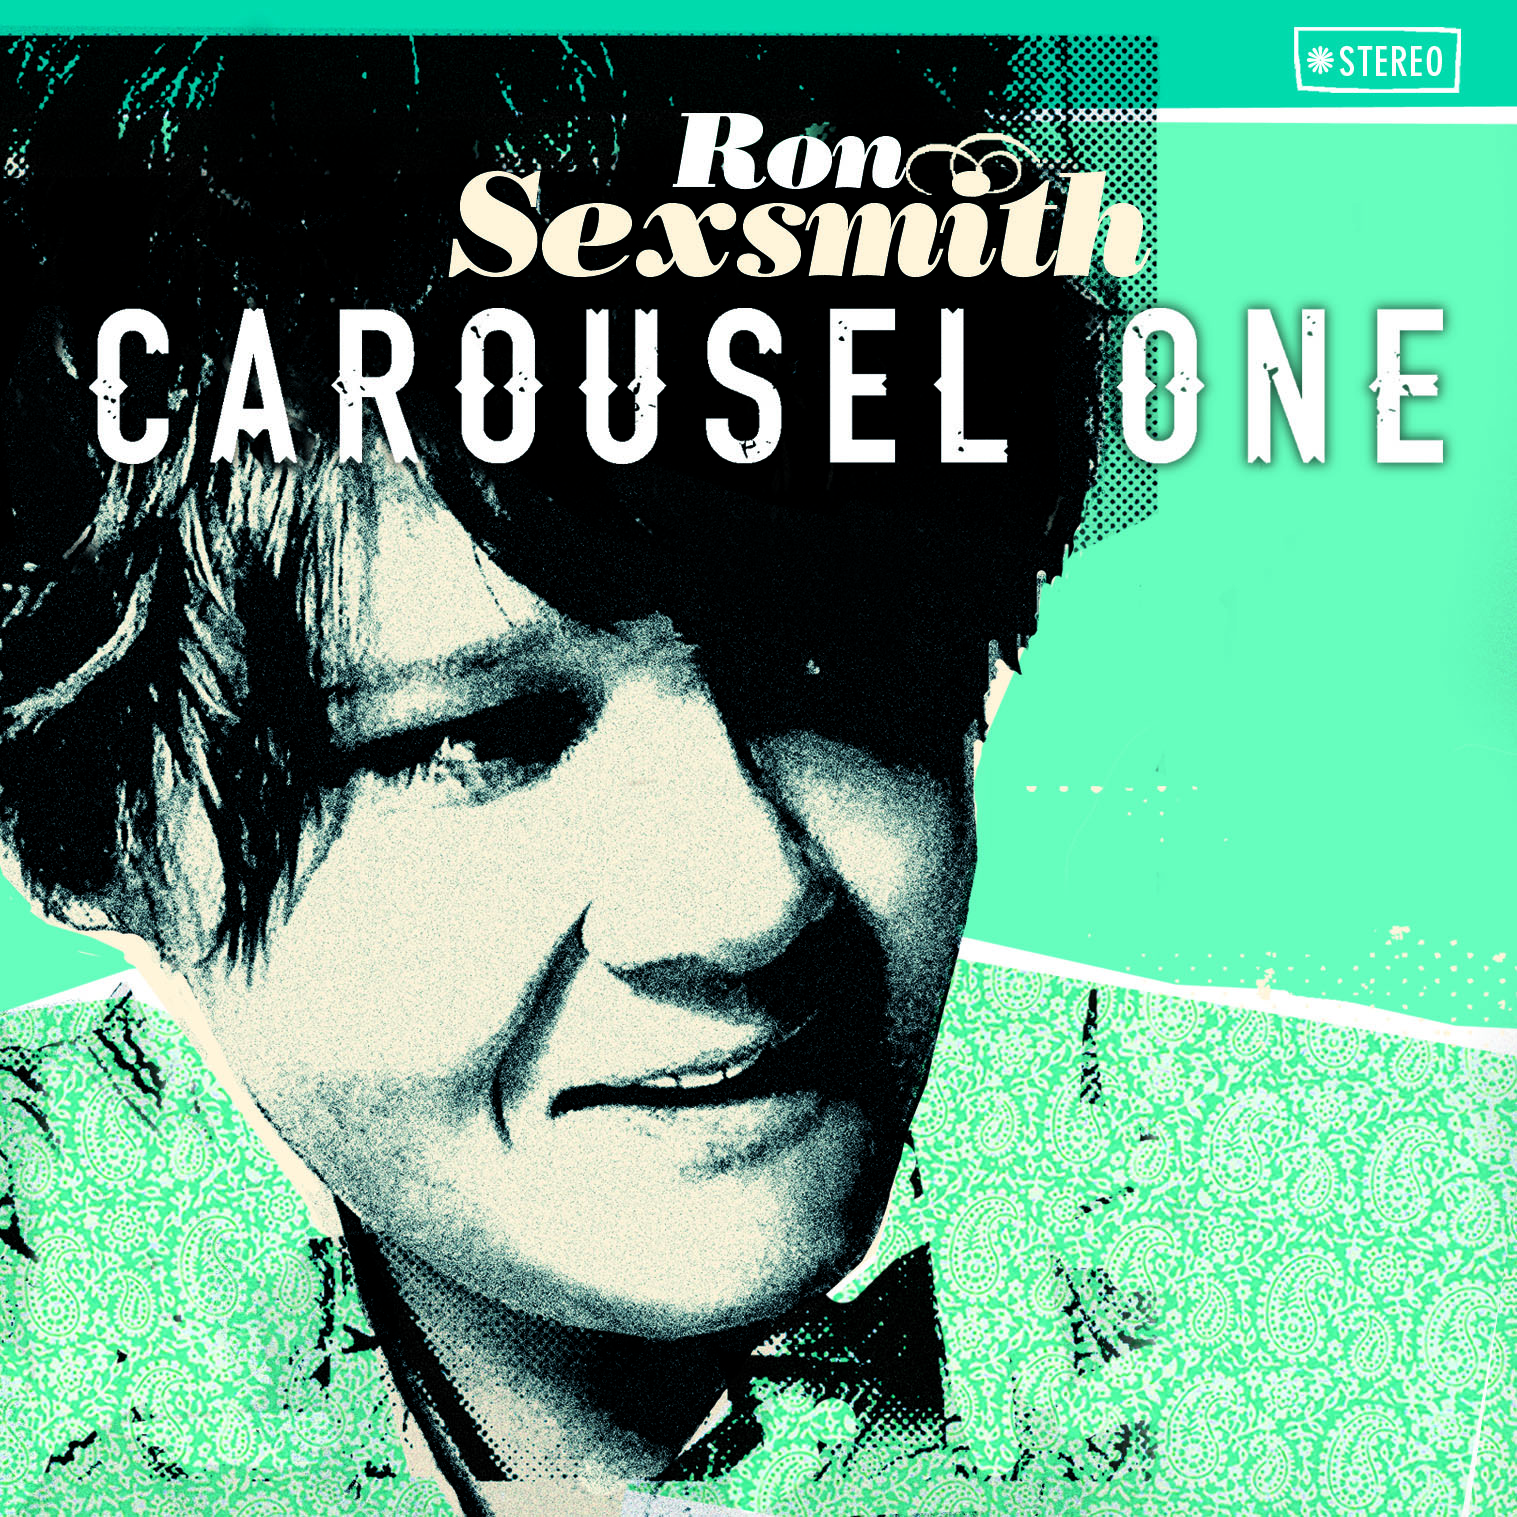 Ron-Sexsmith-Carousel